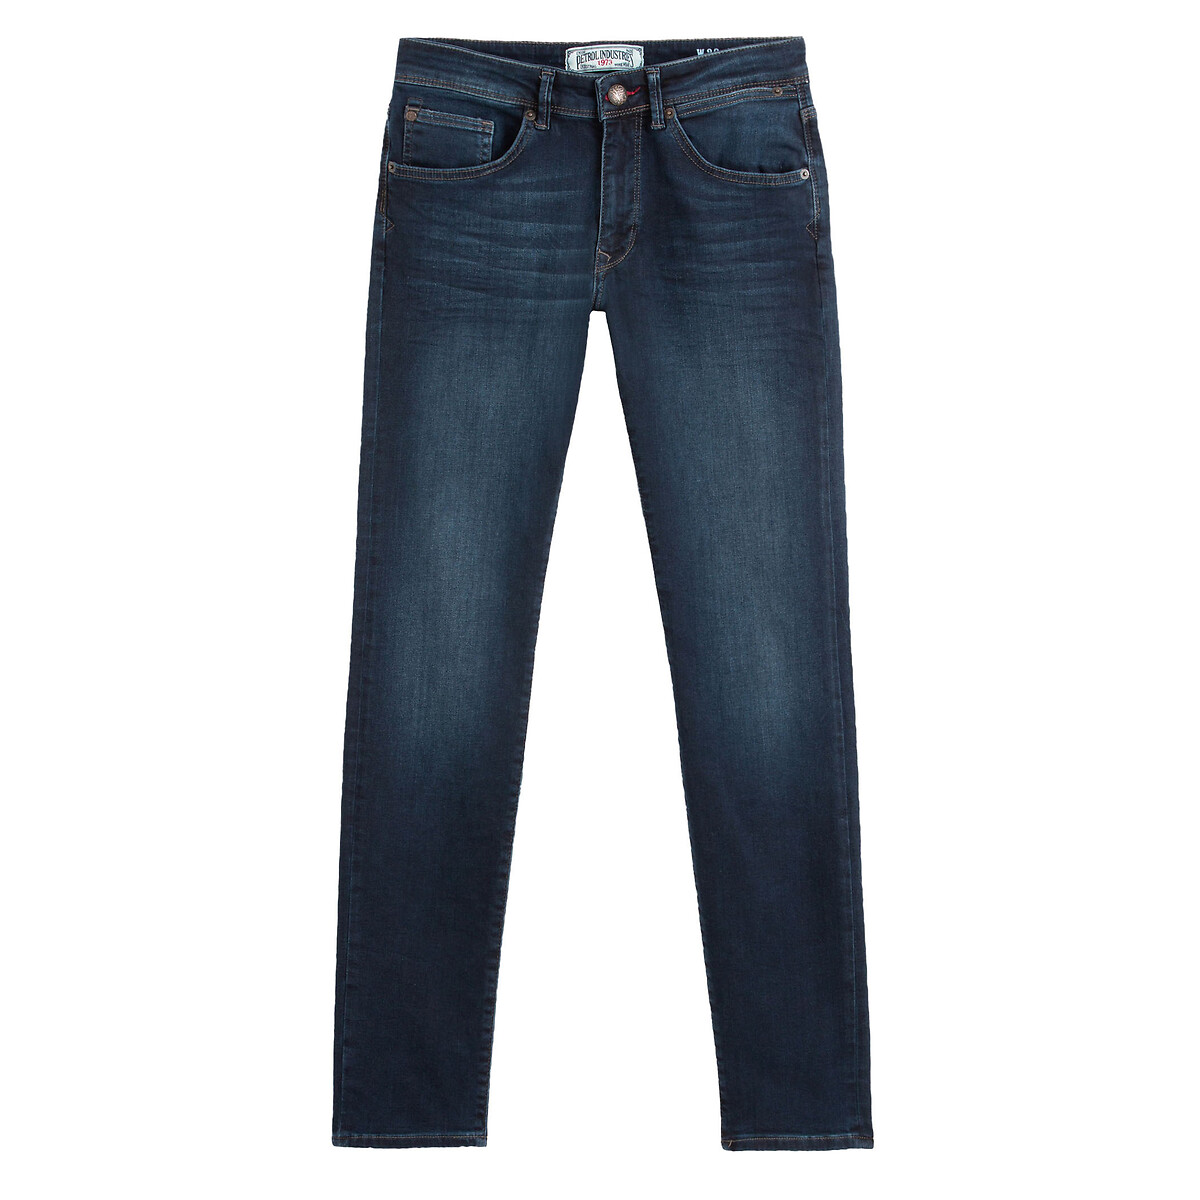 Supreme Stretch Seaham Classic Jeans in Slim Fit